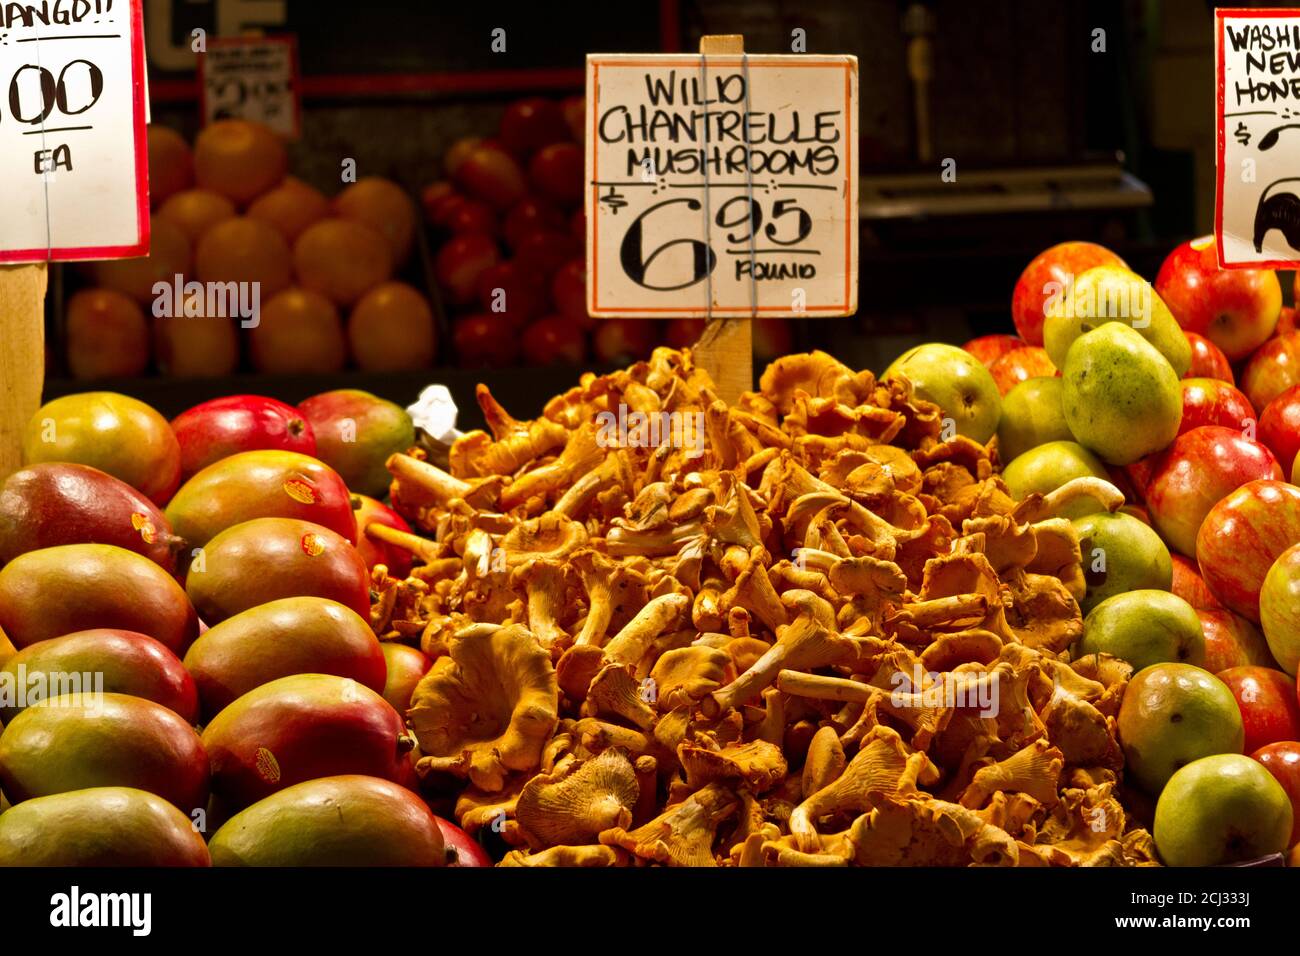 Organic apples and wild Chantrelle Mushrooms on display at Pike Market, Seattle, WA. Stock Photo